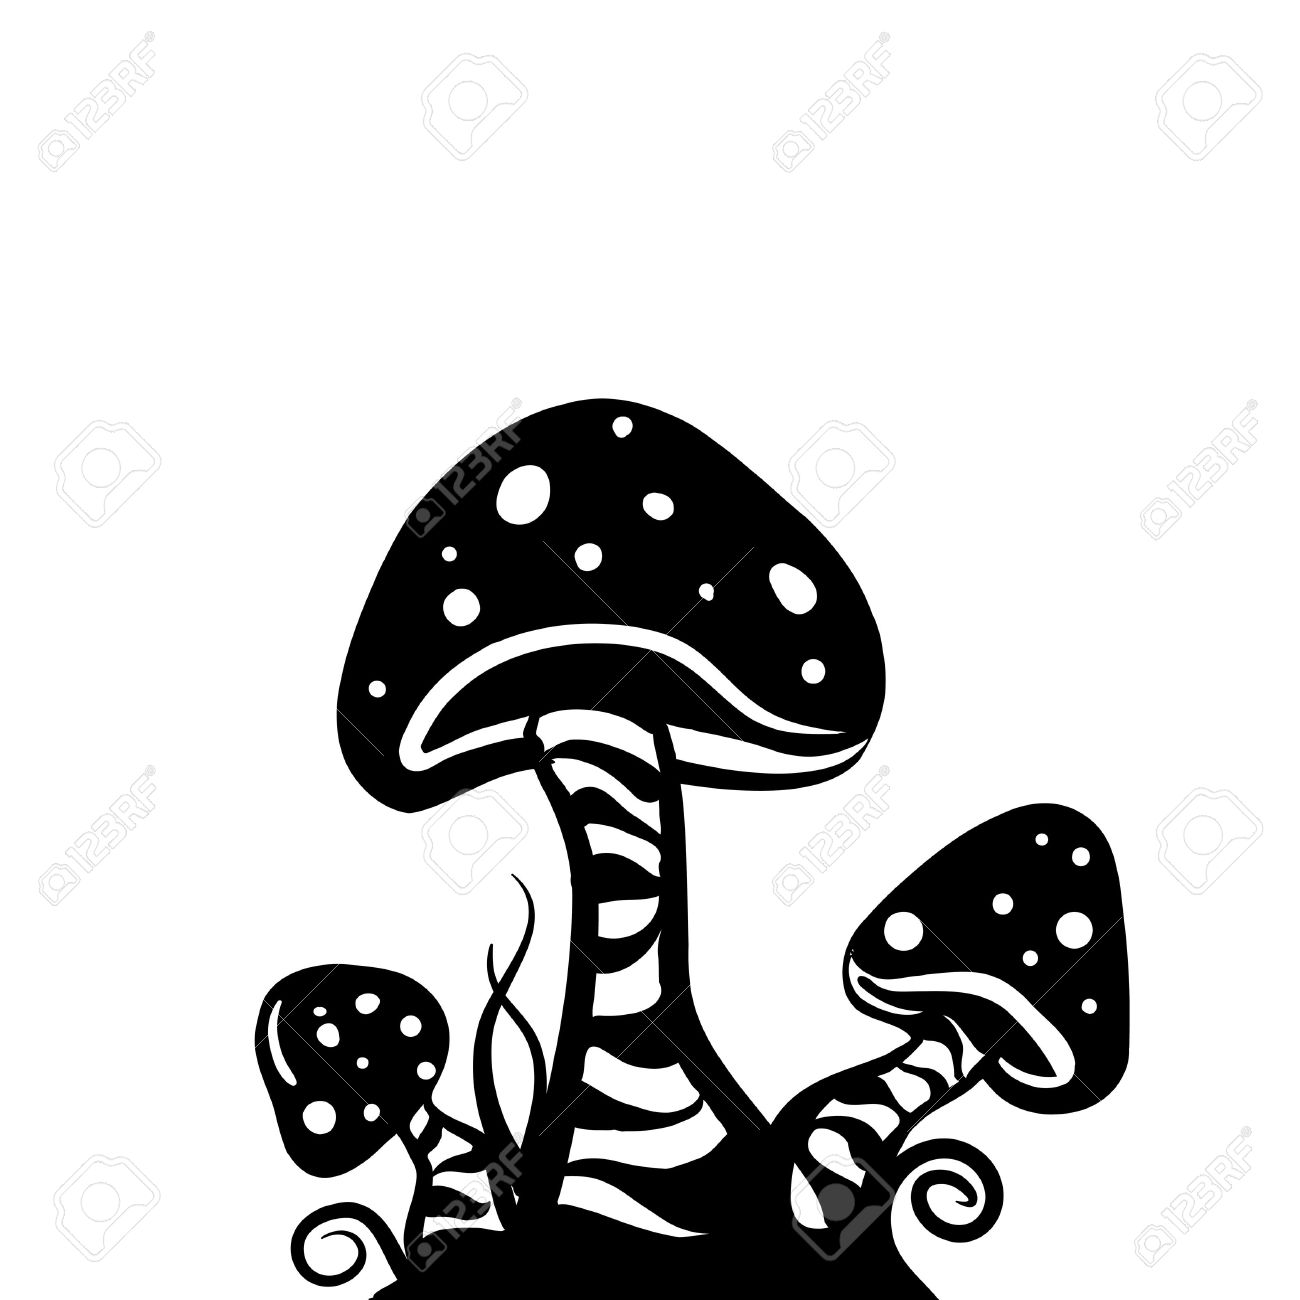 Mushroom Cartoon Drawing at GetDrawings.com | Free for personal use